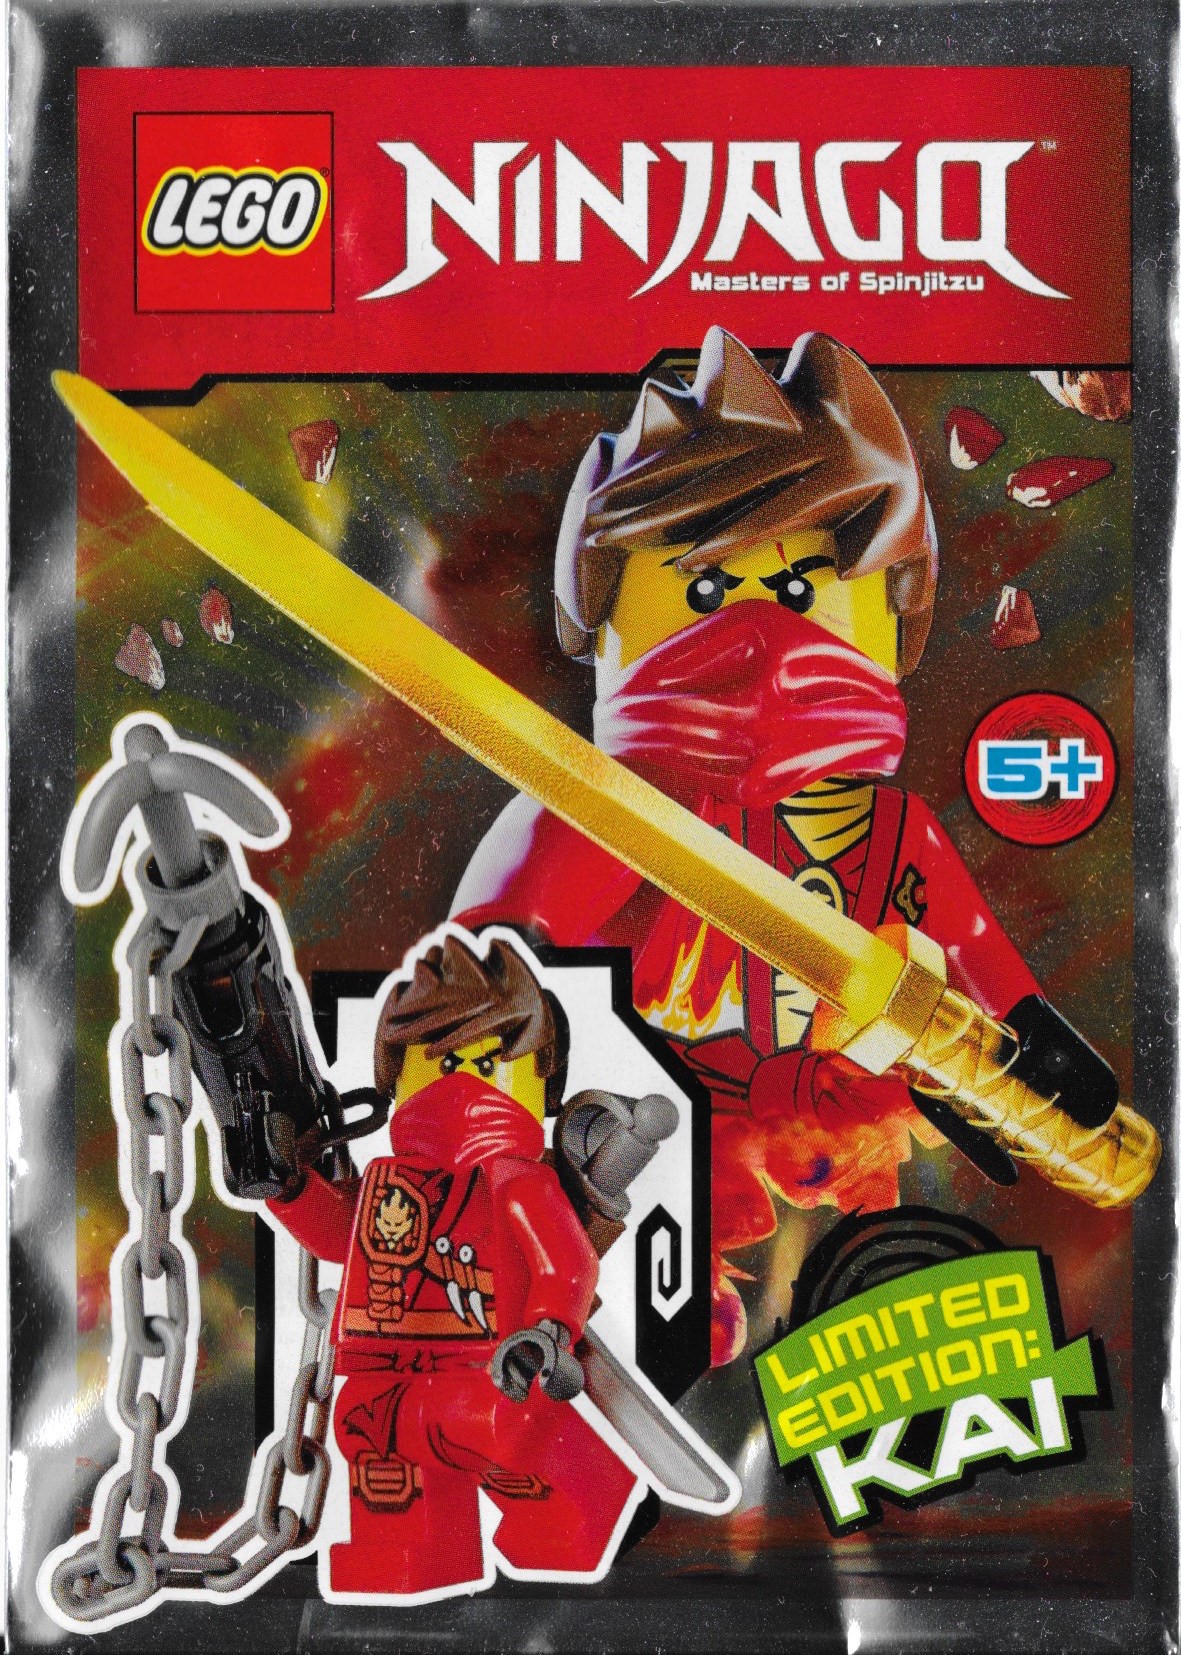 LEGO Ninjago Clouse Minifigure Foil Pack Set 891610 